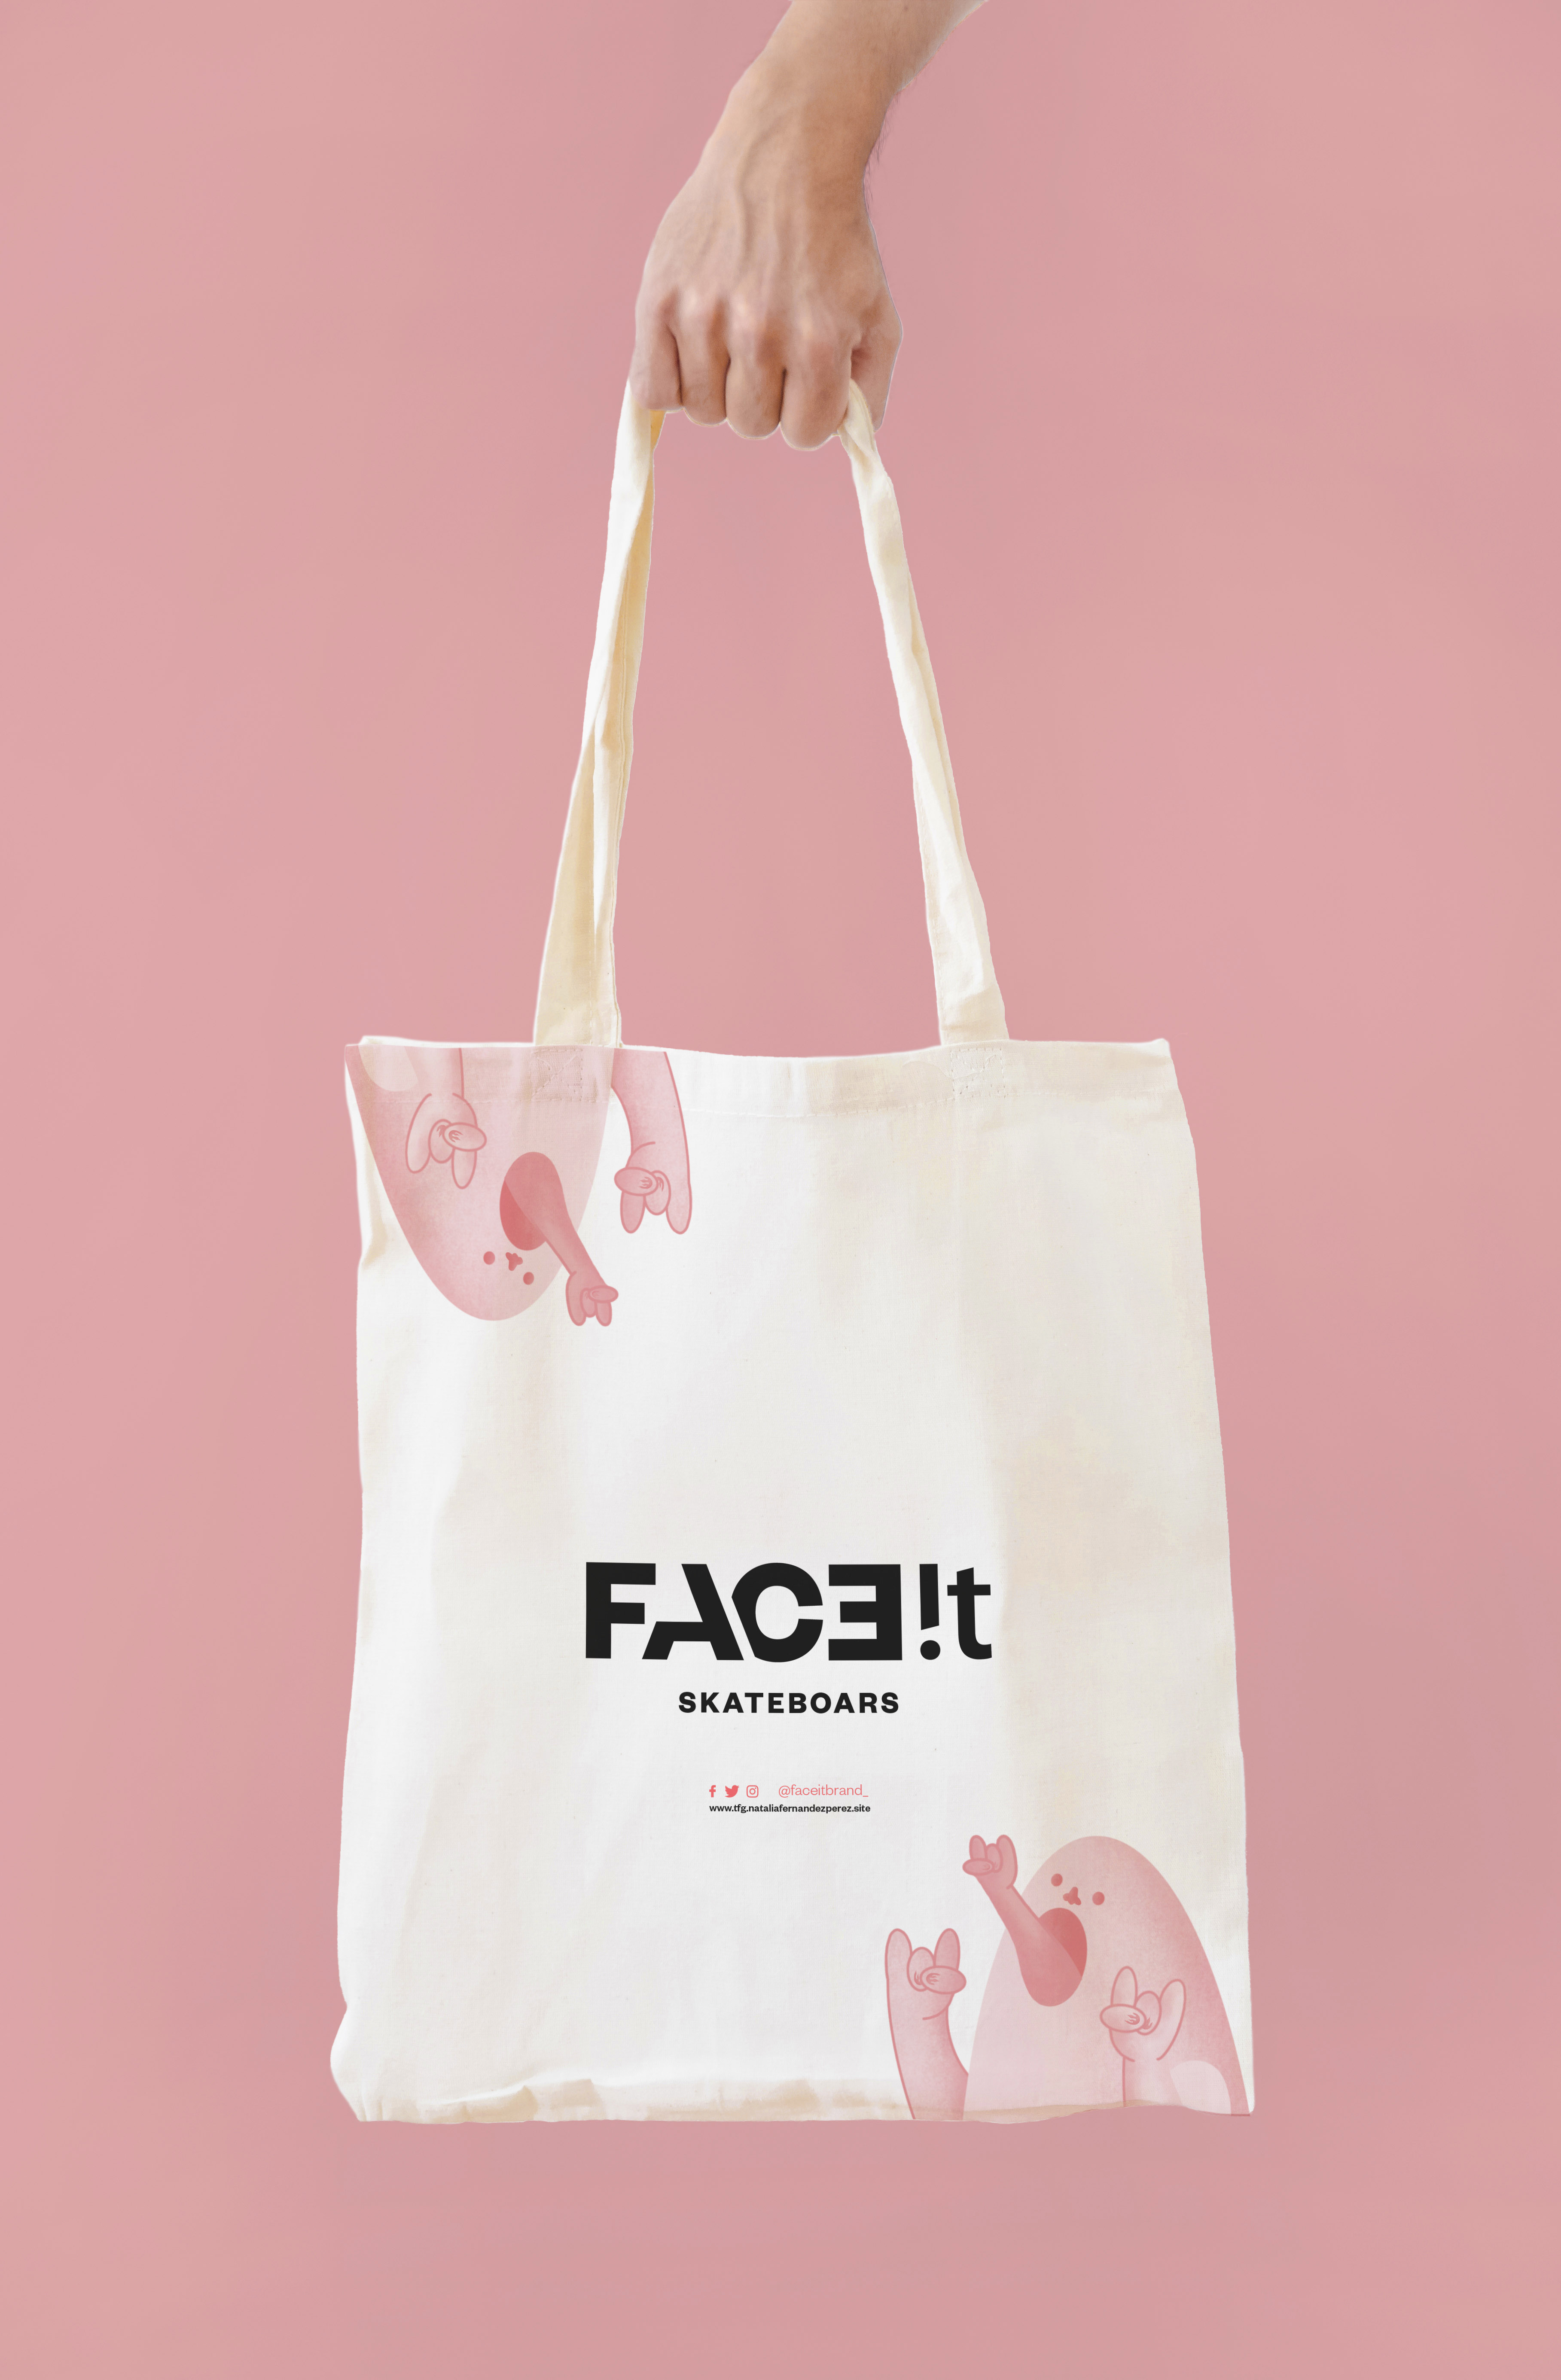 FACE!t by Natalia Fernández Pérez - Creative Work - $i